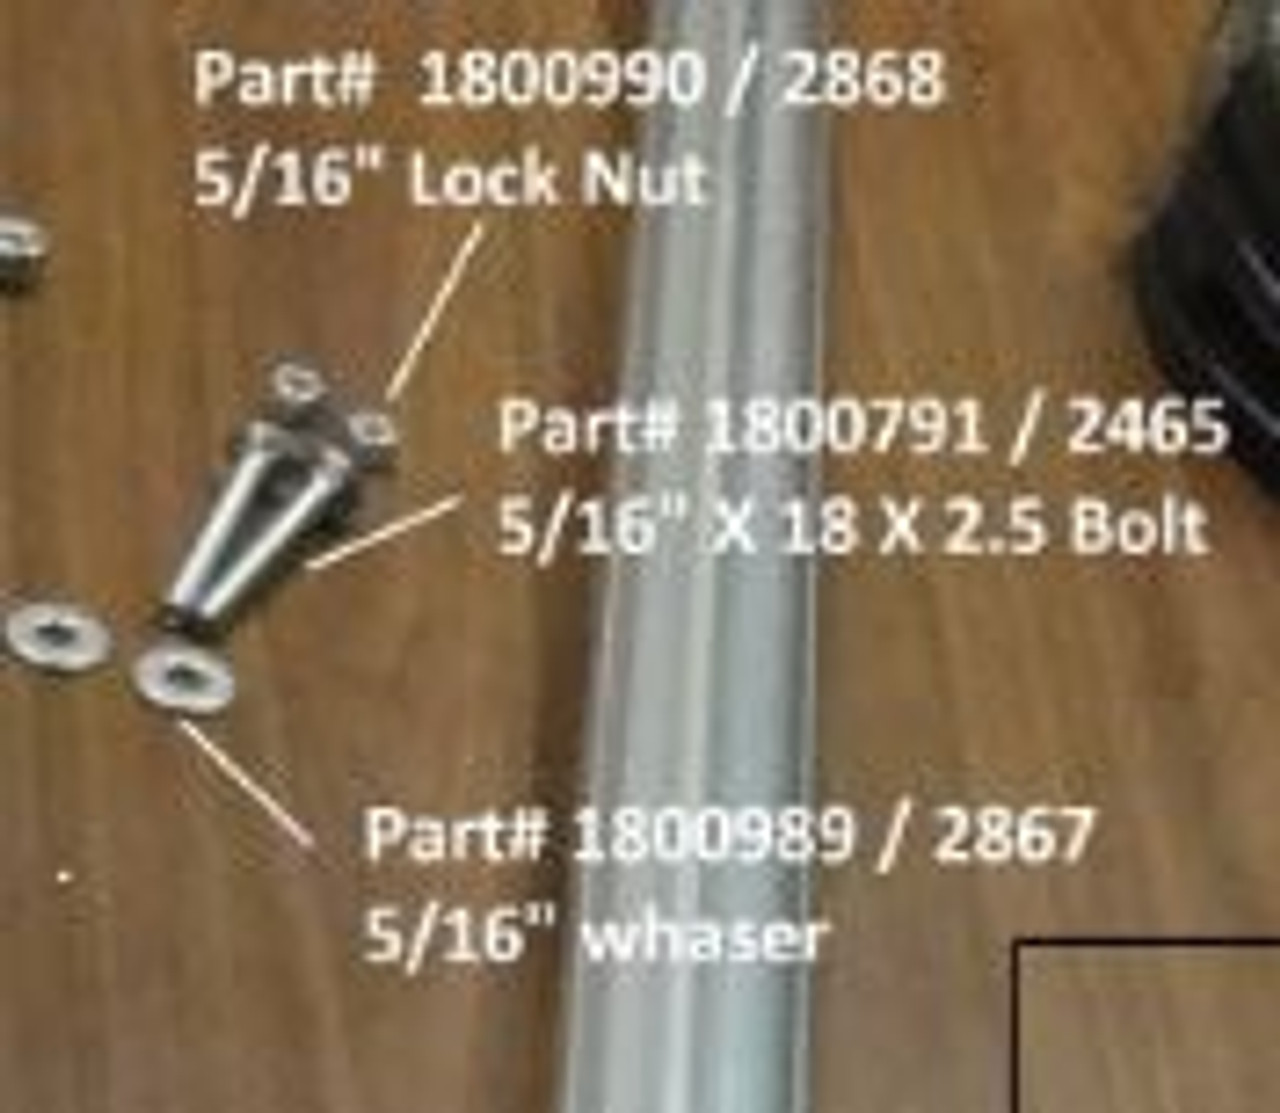 Lock Nut - 5/16" (20-2868/1800990)